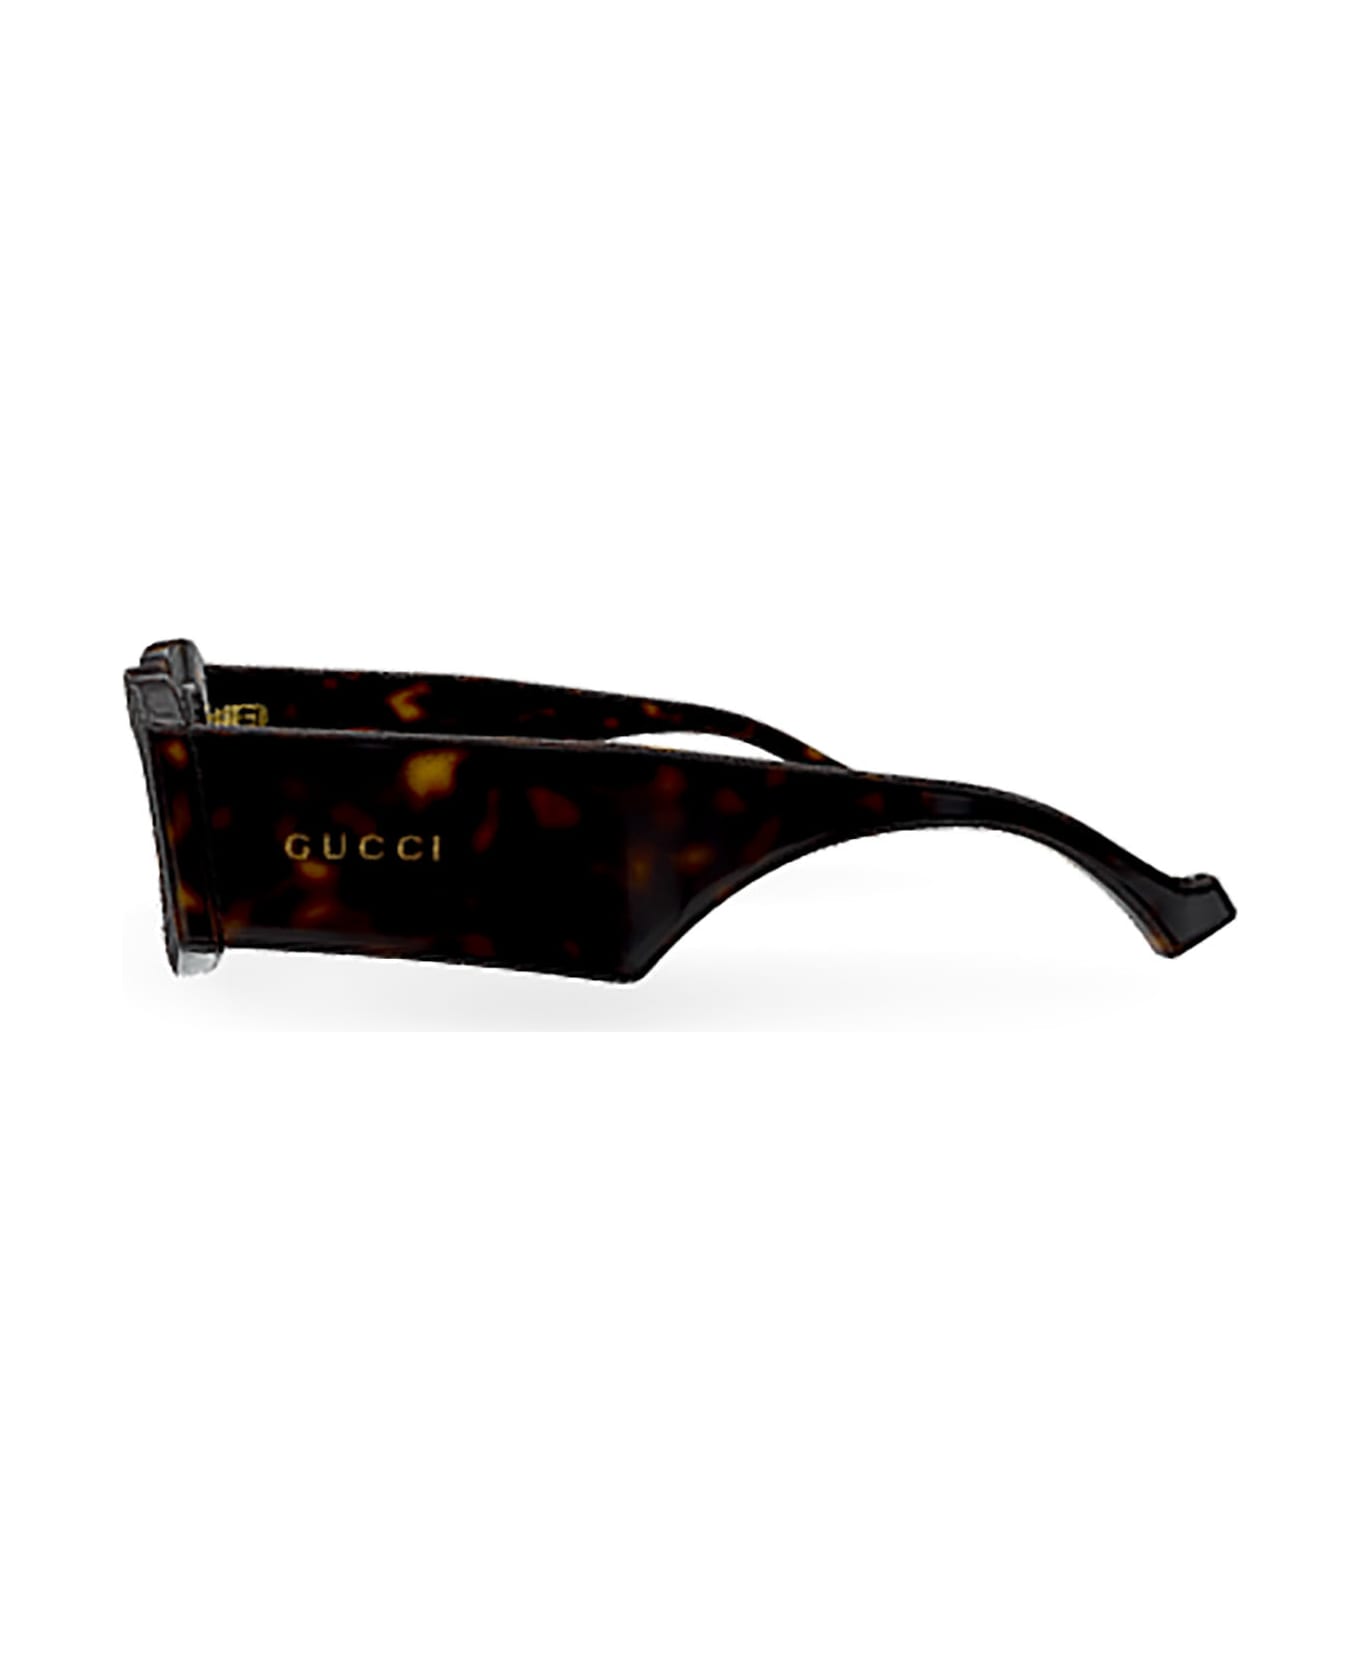 Gucci Eyewear GG1426S Sunglasses - Havana Havana Transpa